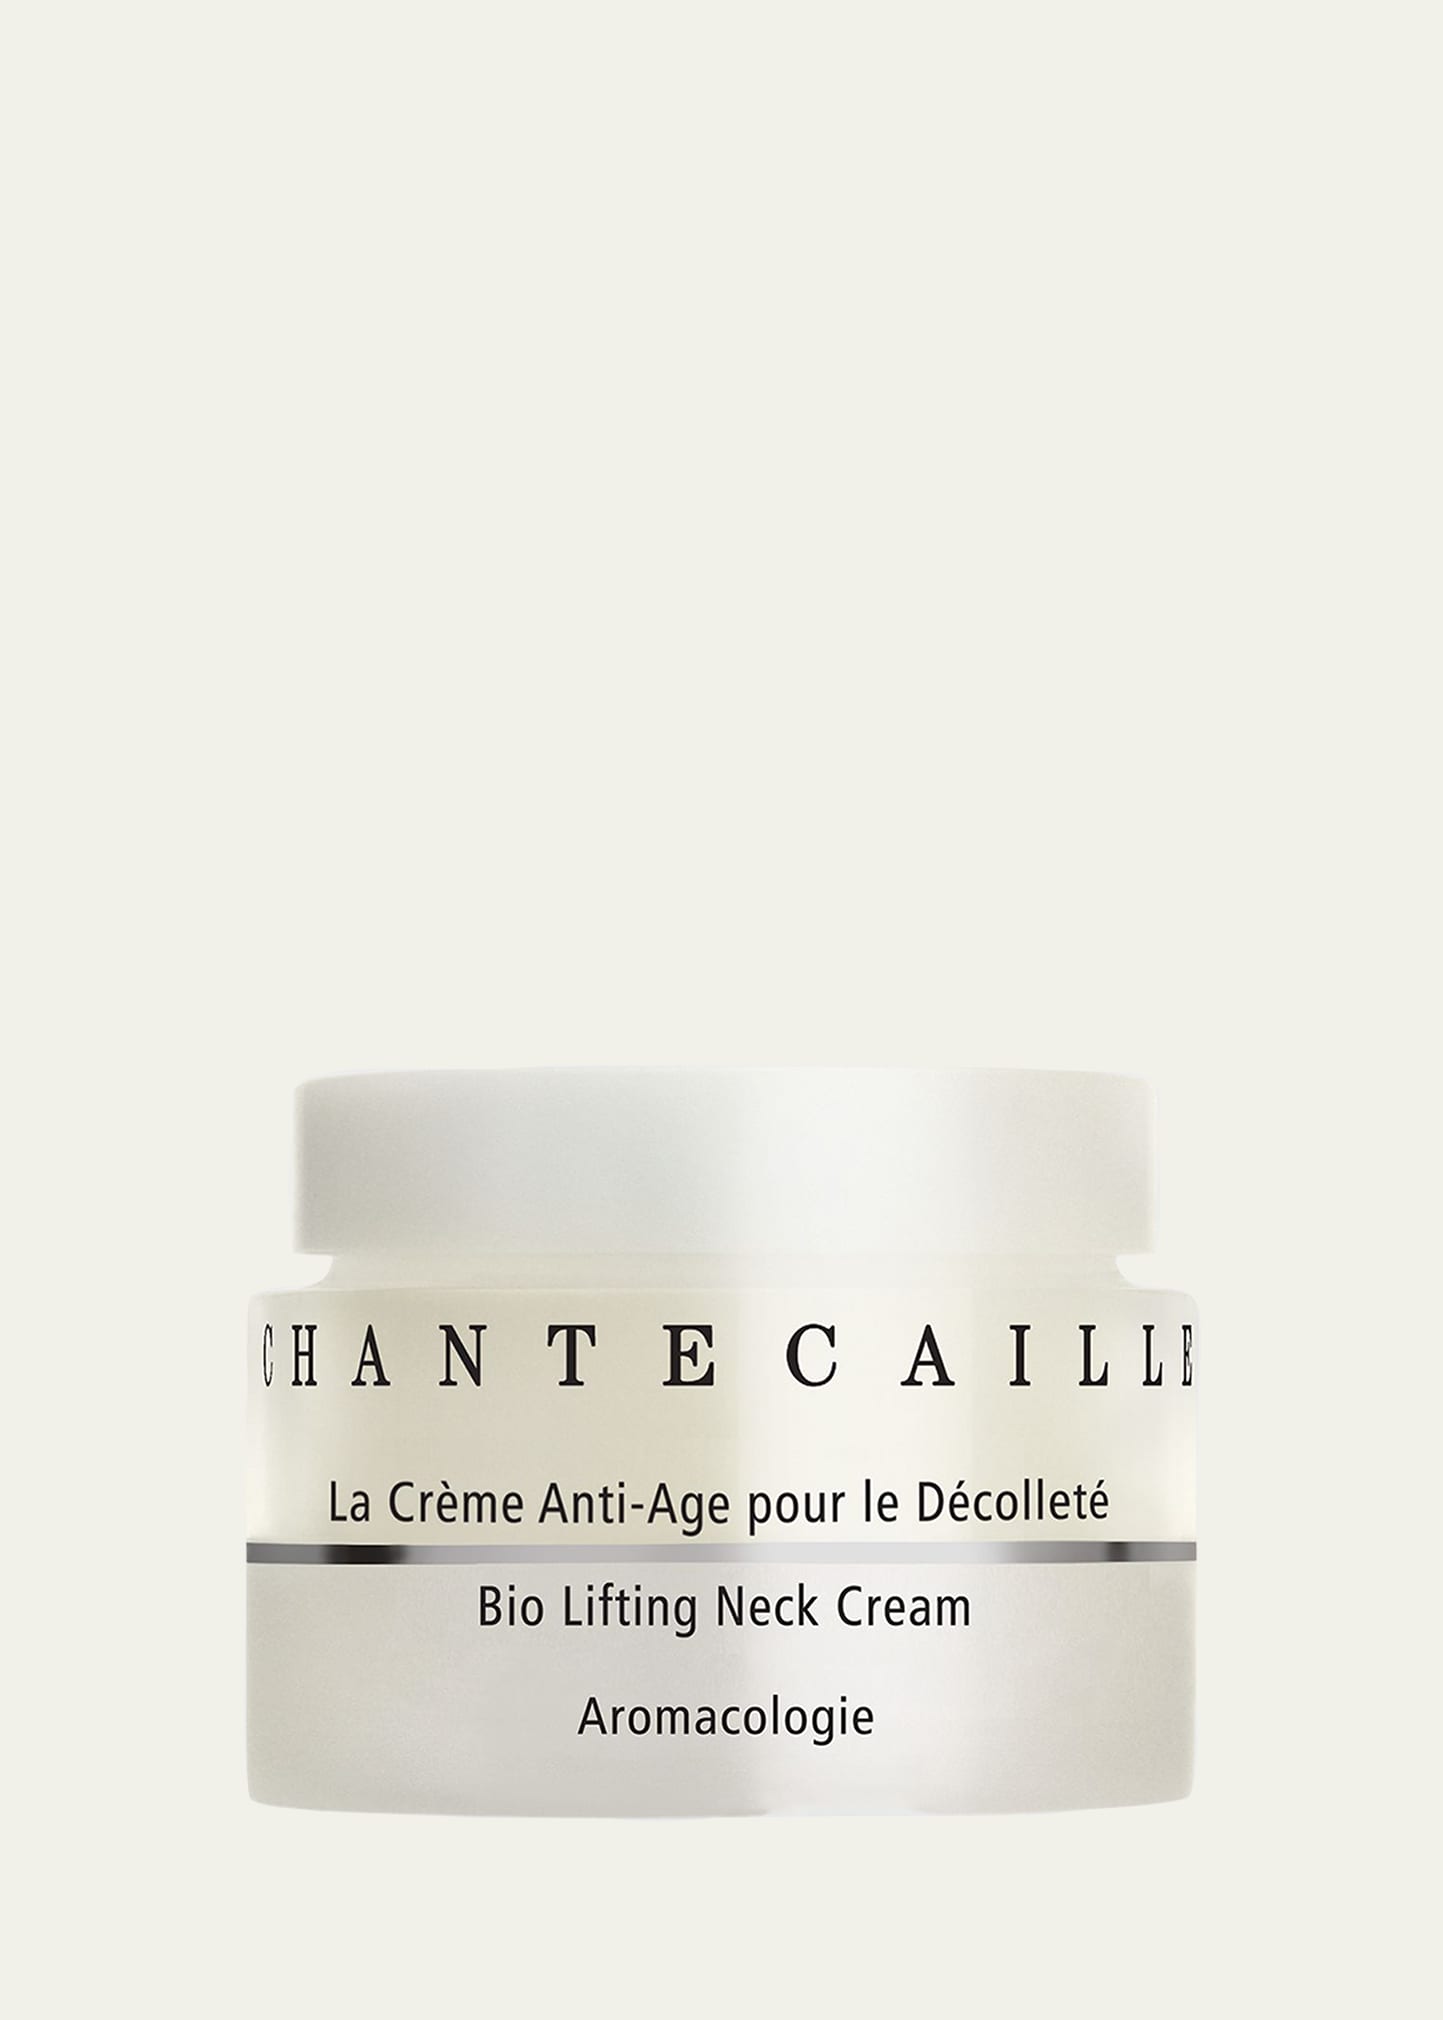 Bio Lifting Neck Cream, 1.7 oz.